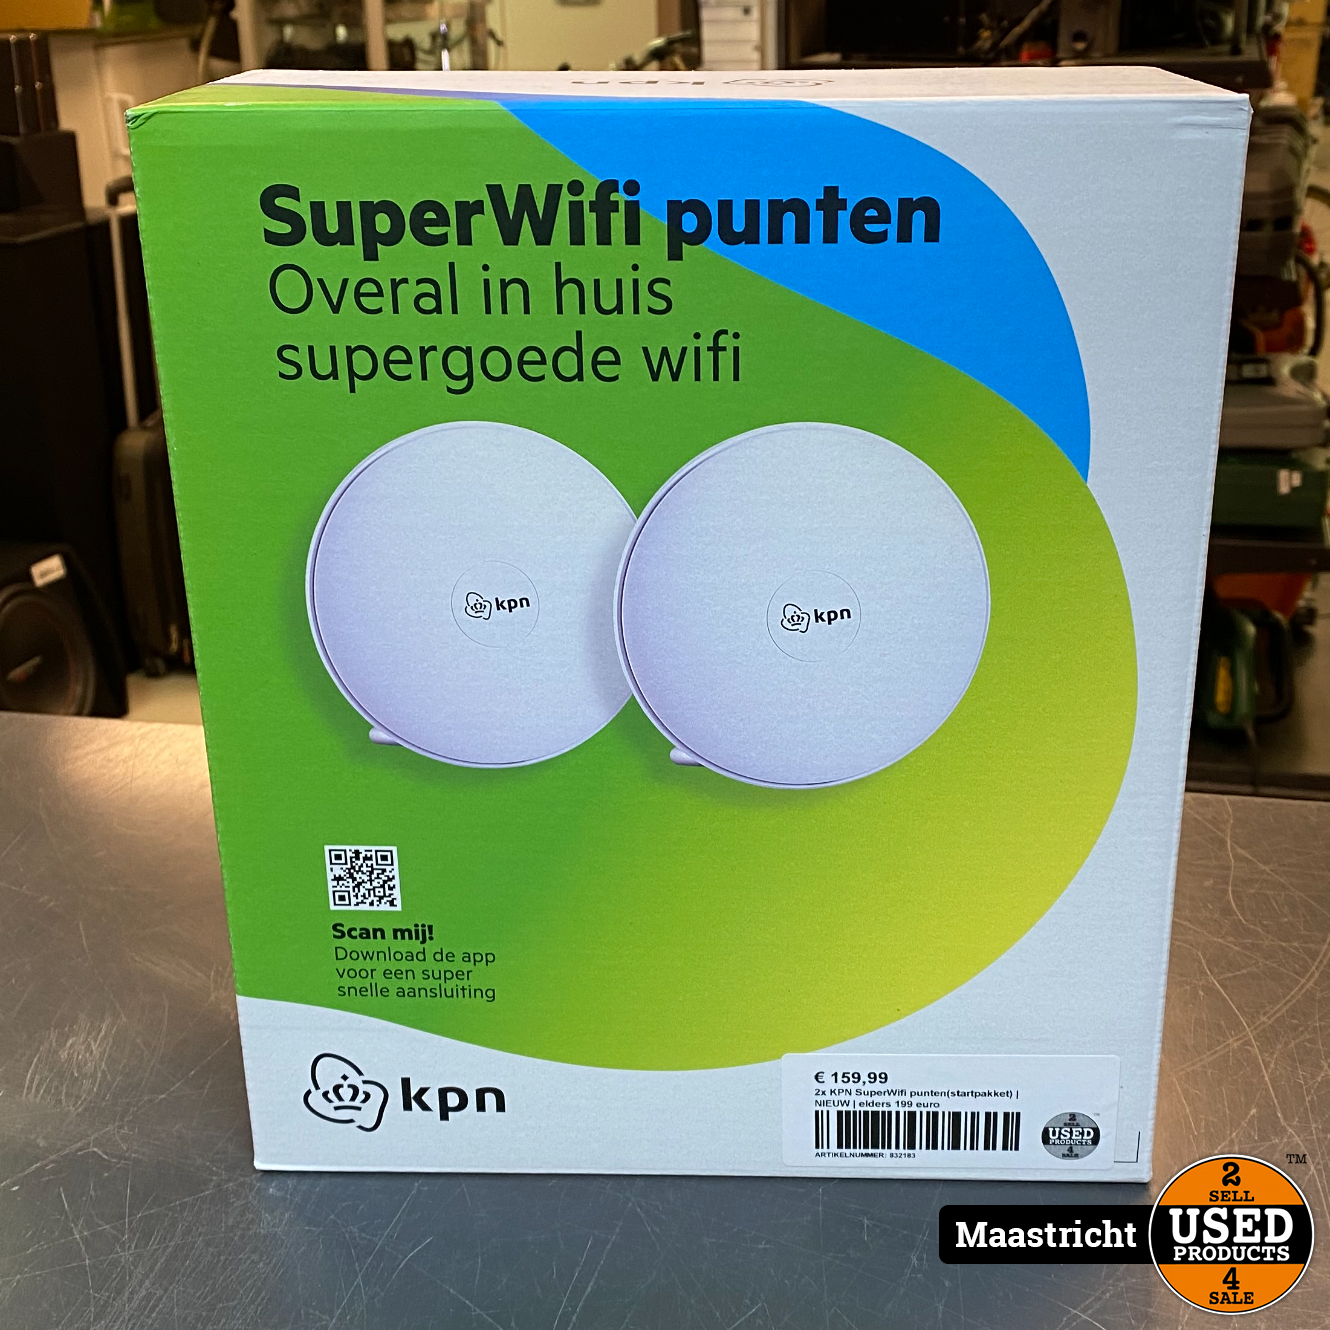 2x KPN SuperWifi punten(startpakket) NIEUW elders 199 euro - Used Products Maastricht